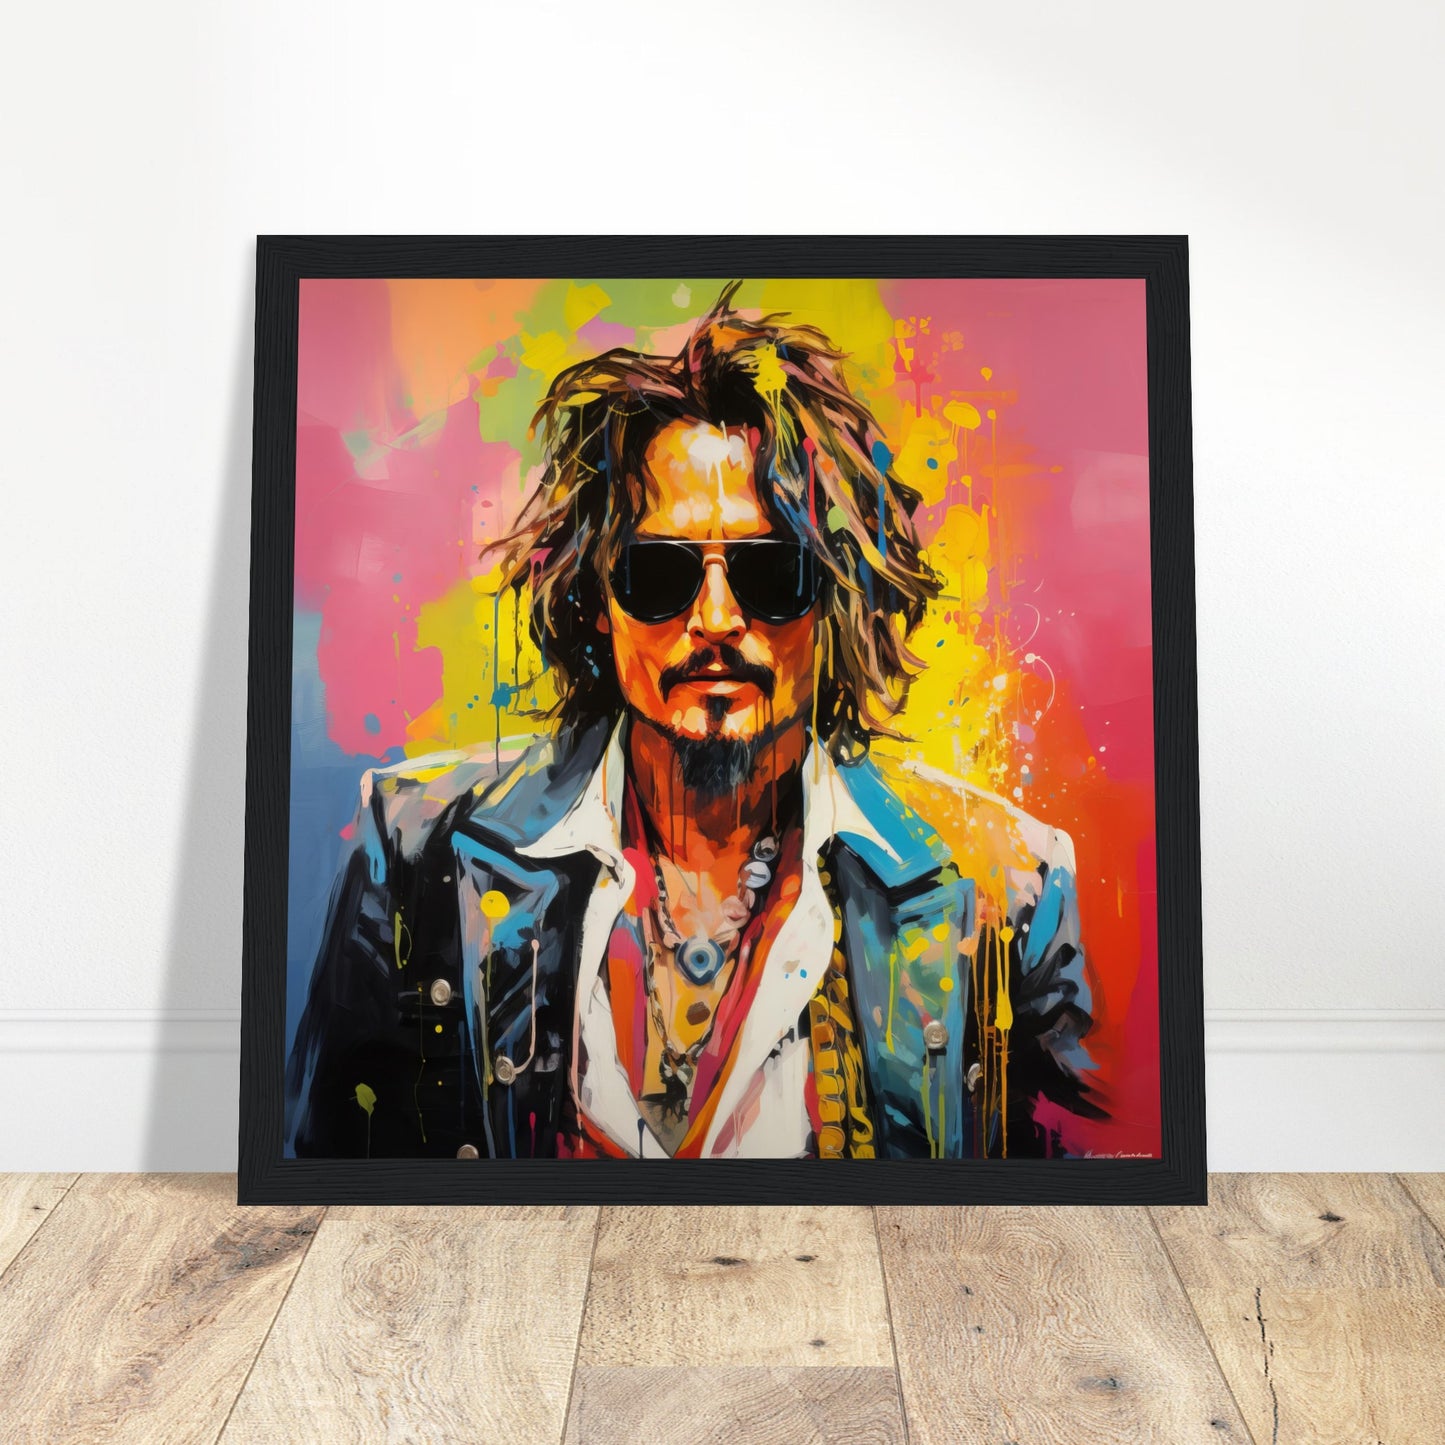 Johnny Depp Artwork - Print Room Ltd Black frame 30x30 cm / 12x12"